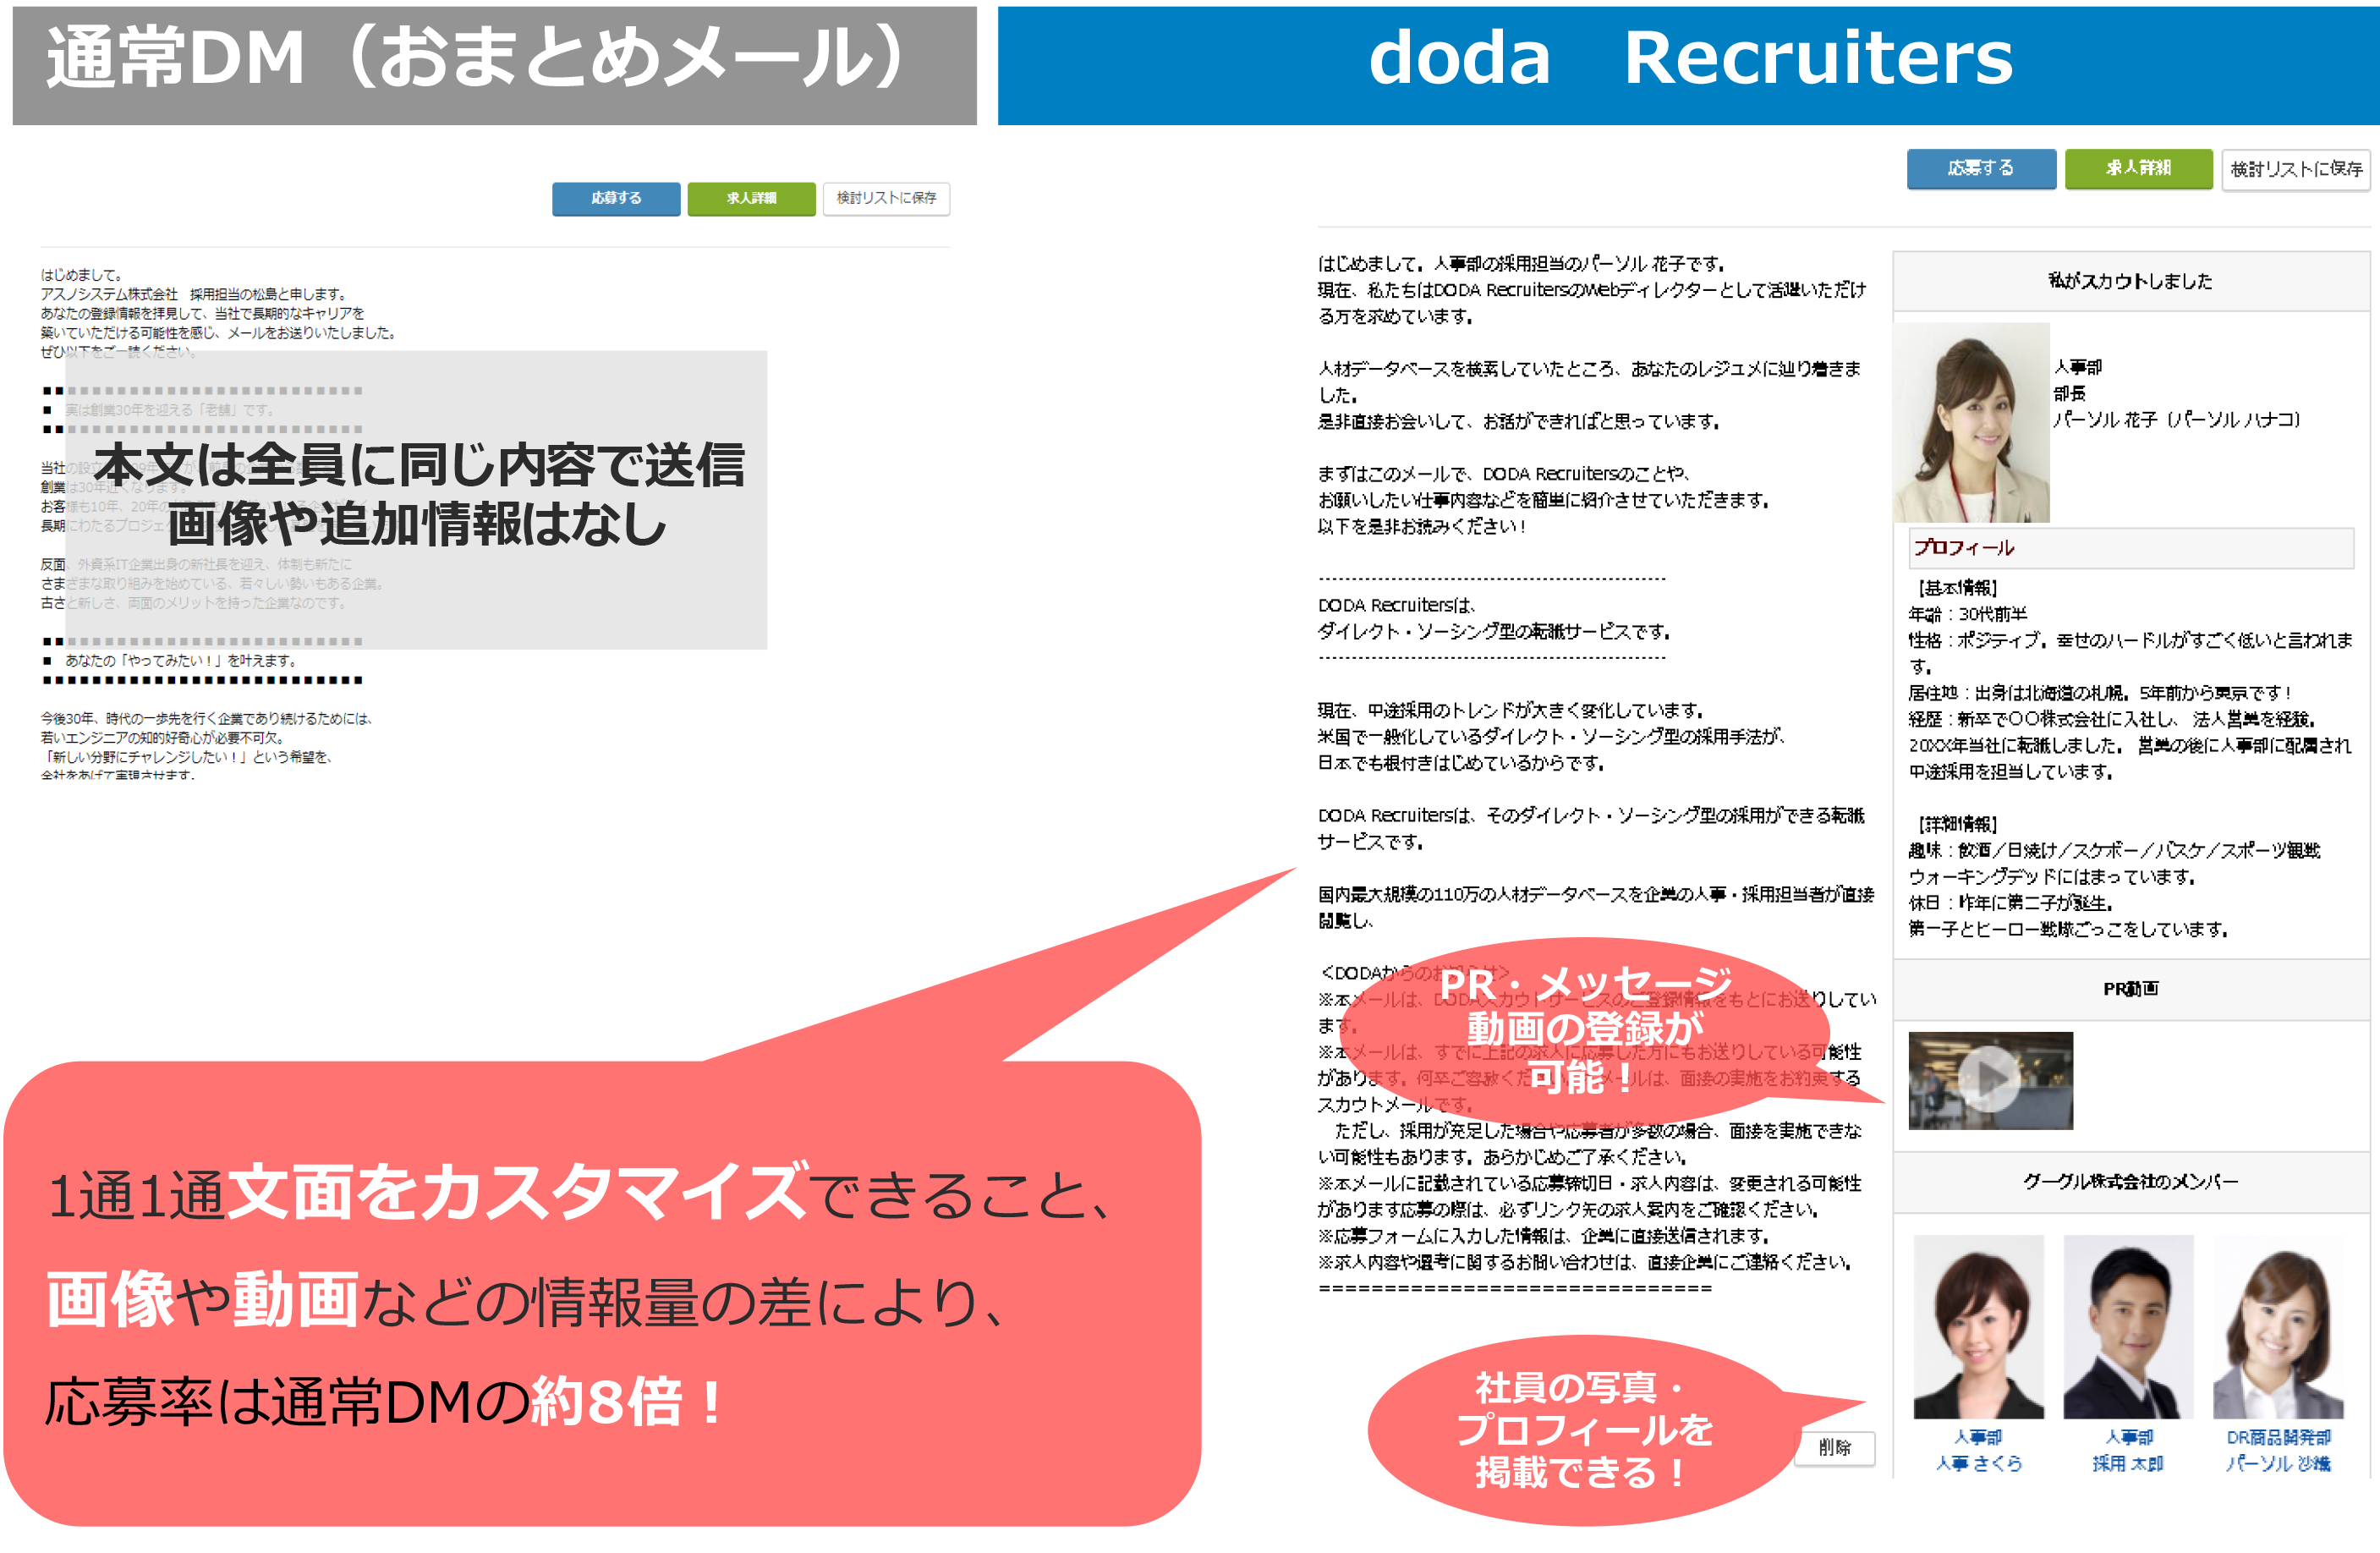 doda Recruiters（デューダリクルーターズ）とDMの違い4